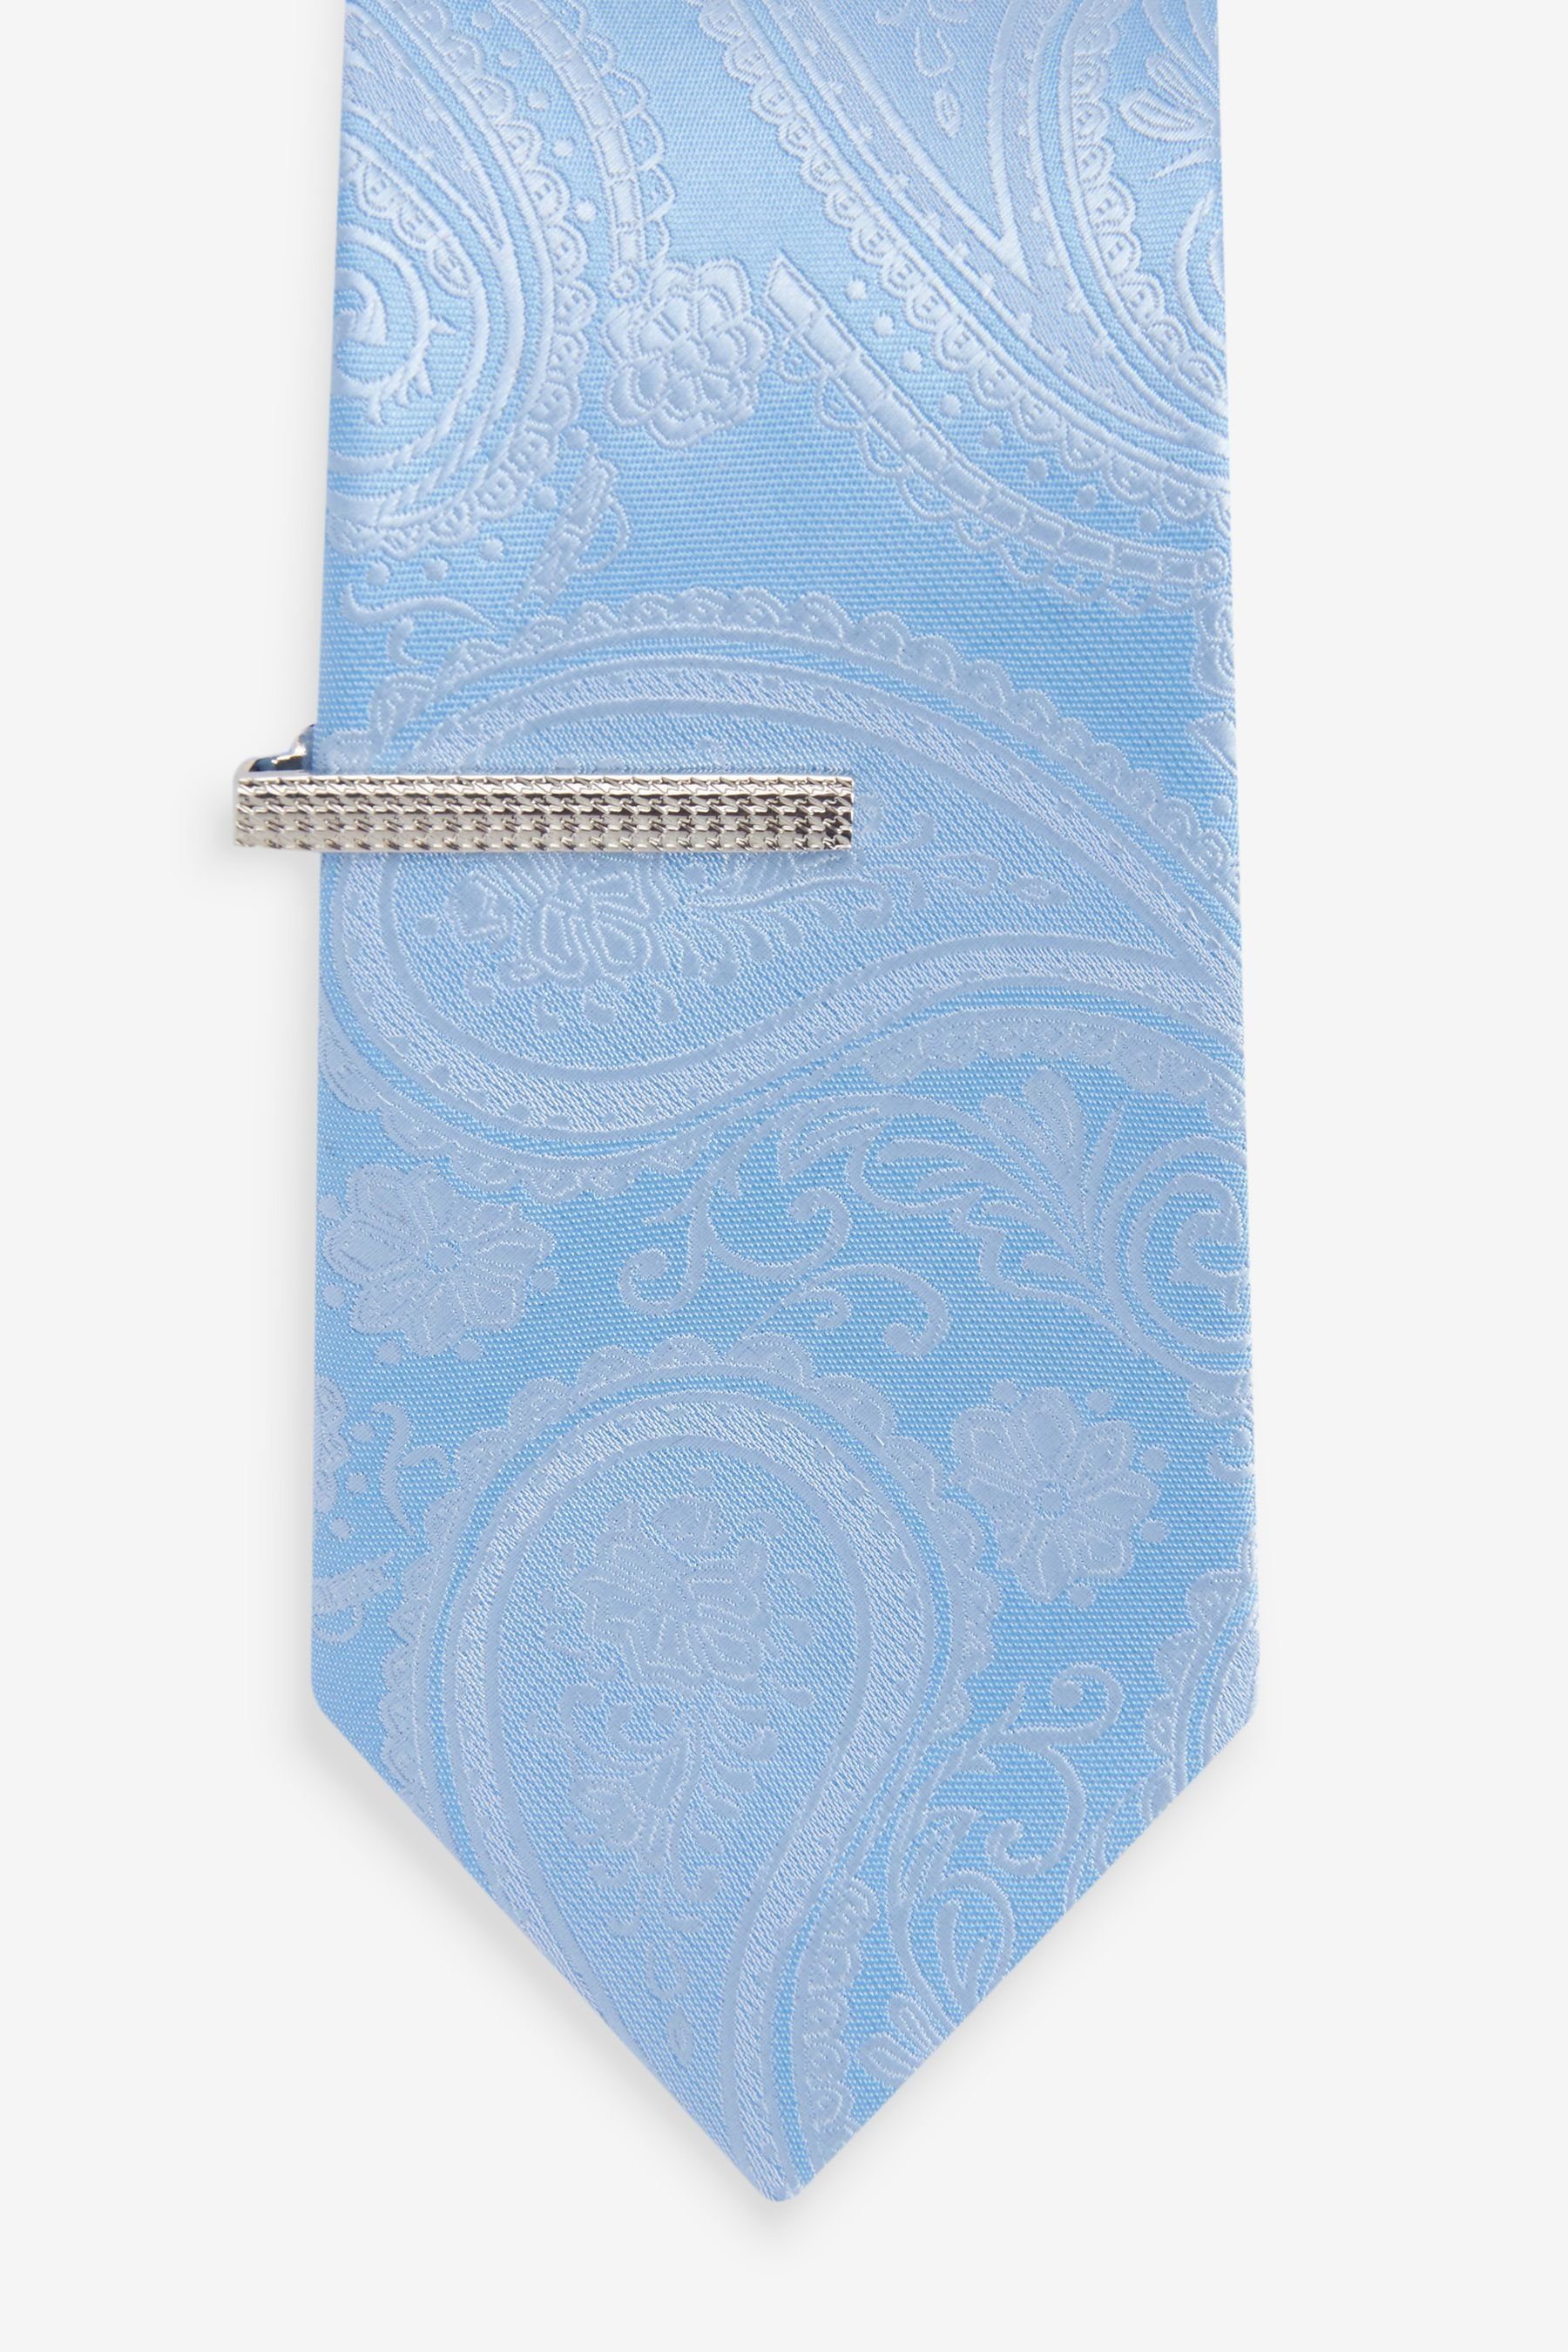 Next Krawattenklammer, Paisley Blue Light Gemusterte Krawatte Slim (2-St) Krawatte mit